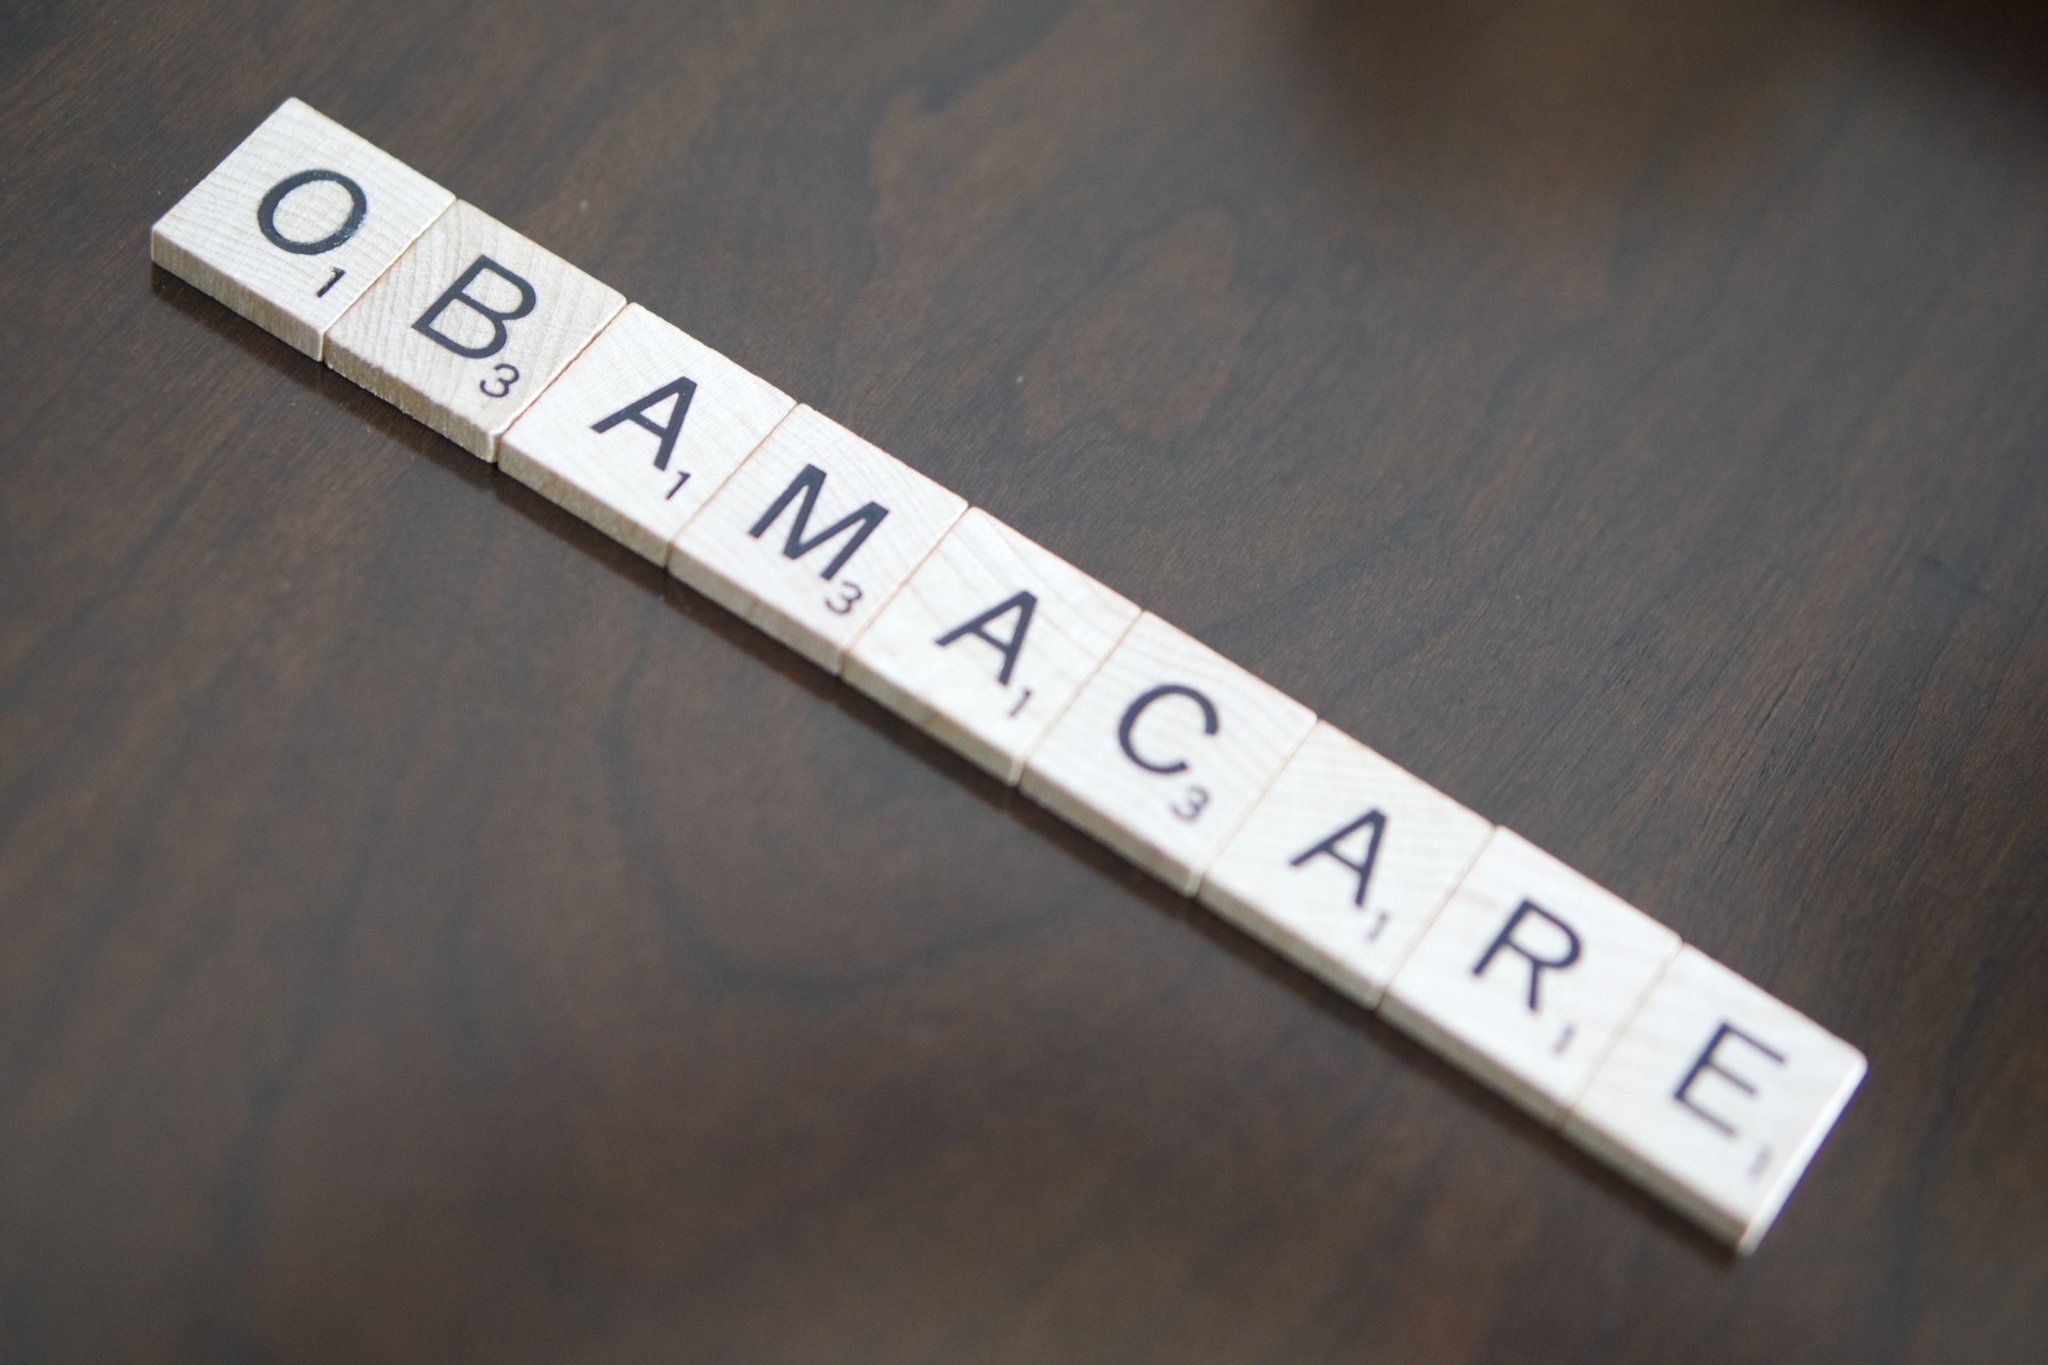 Obamacare, автор: simmons.kevin4208, лицензия: CC BY 2.0